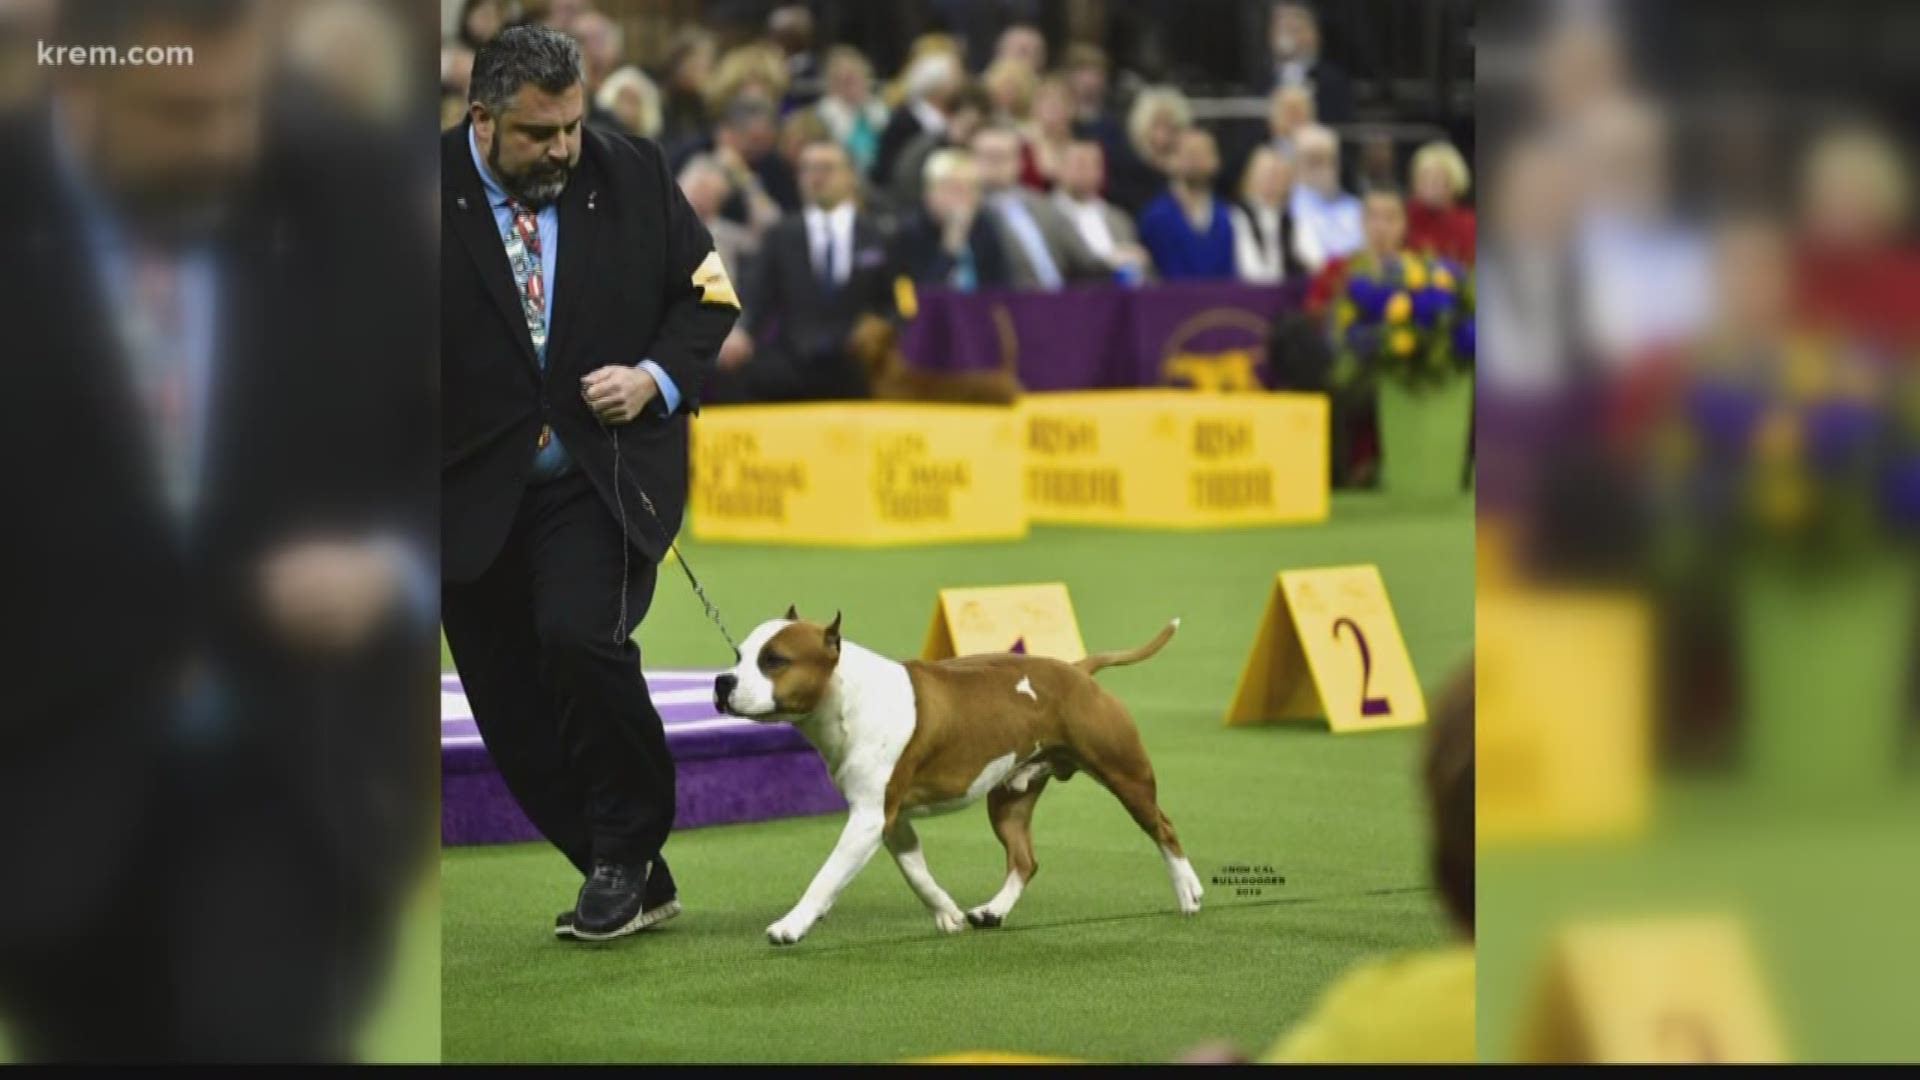 Spokane County dog takes home award at Westminster dog show